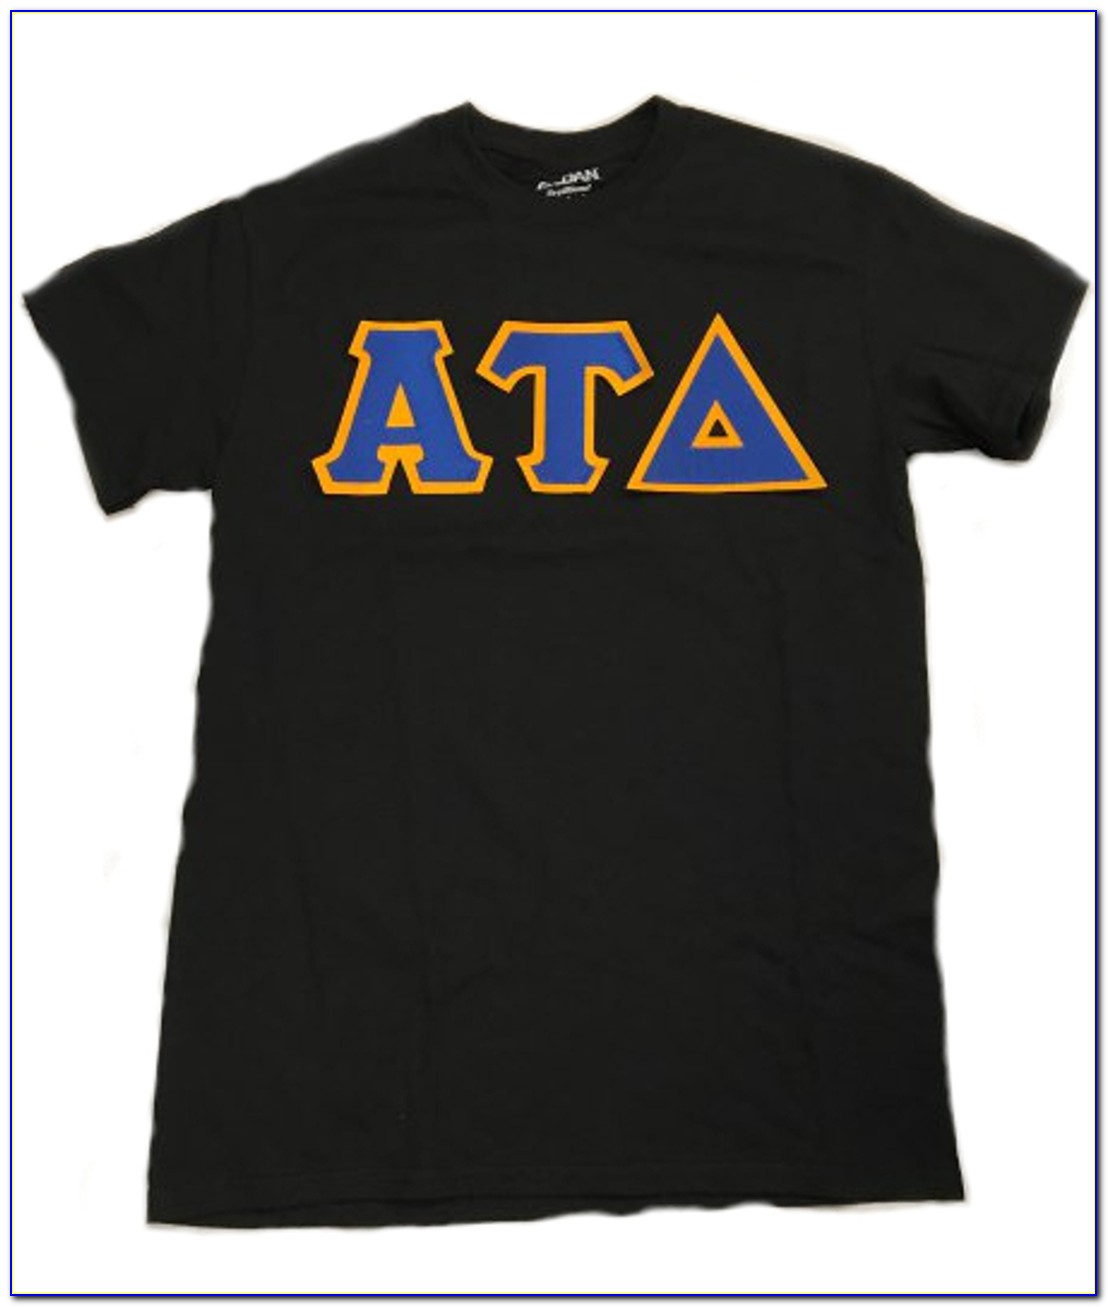 Greek Letters Shirts Cheap